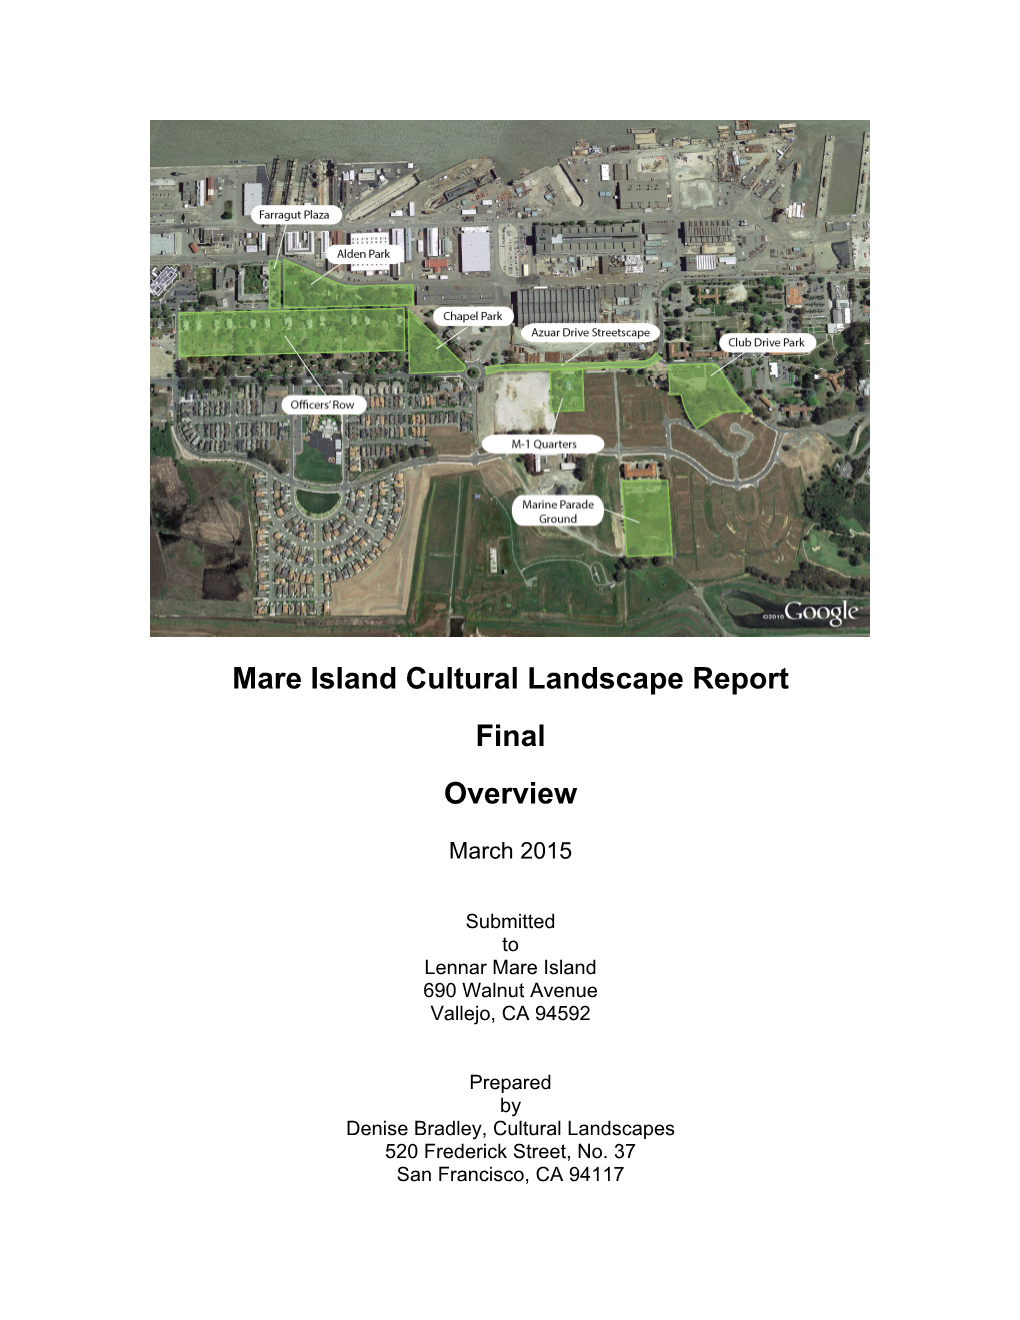 Mare Island Cultural Landscape Report Final Overview